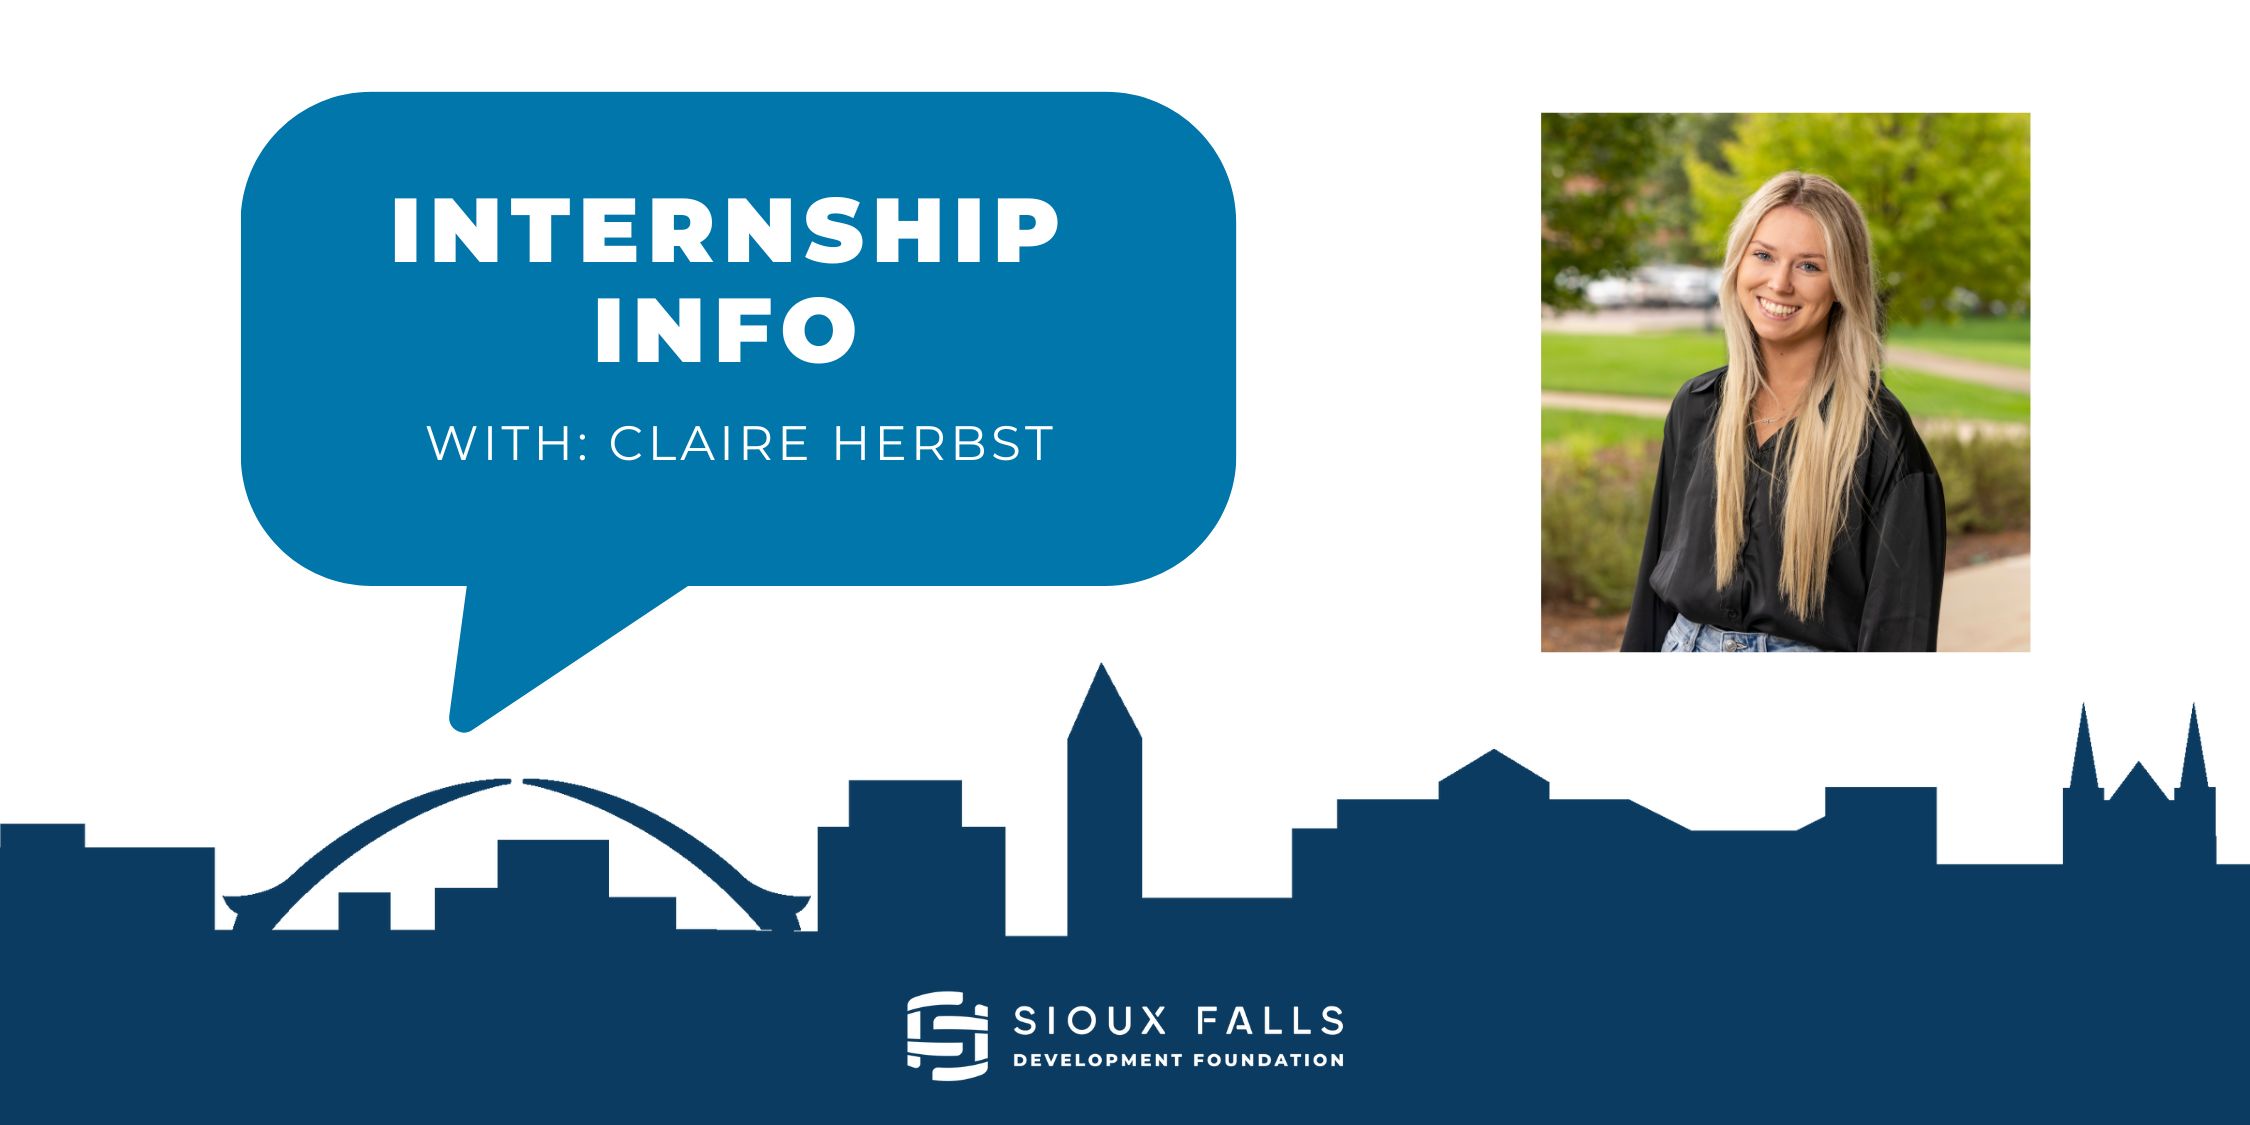 Internship Info: How to prepare for applying for internships